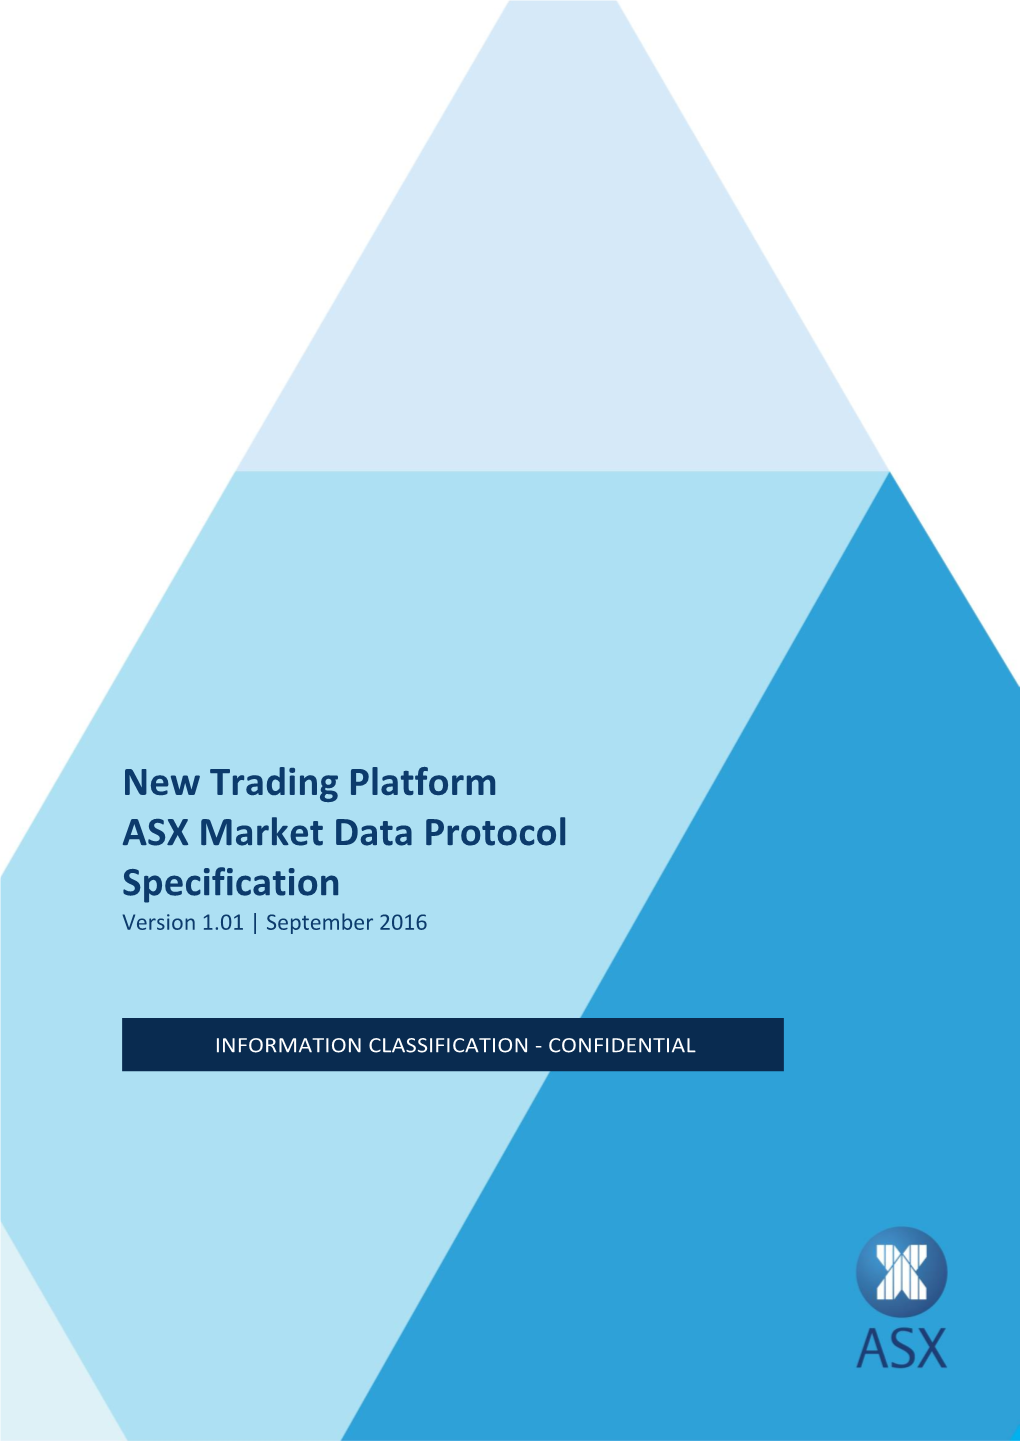 ASX Market Data Protocol Specification V1.01 © Copyright 2016 ASX Limited ABN 98 008 624 691